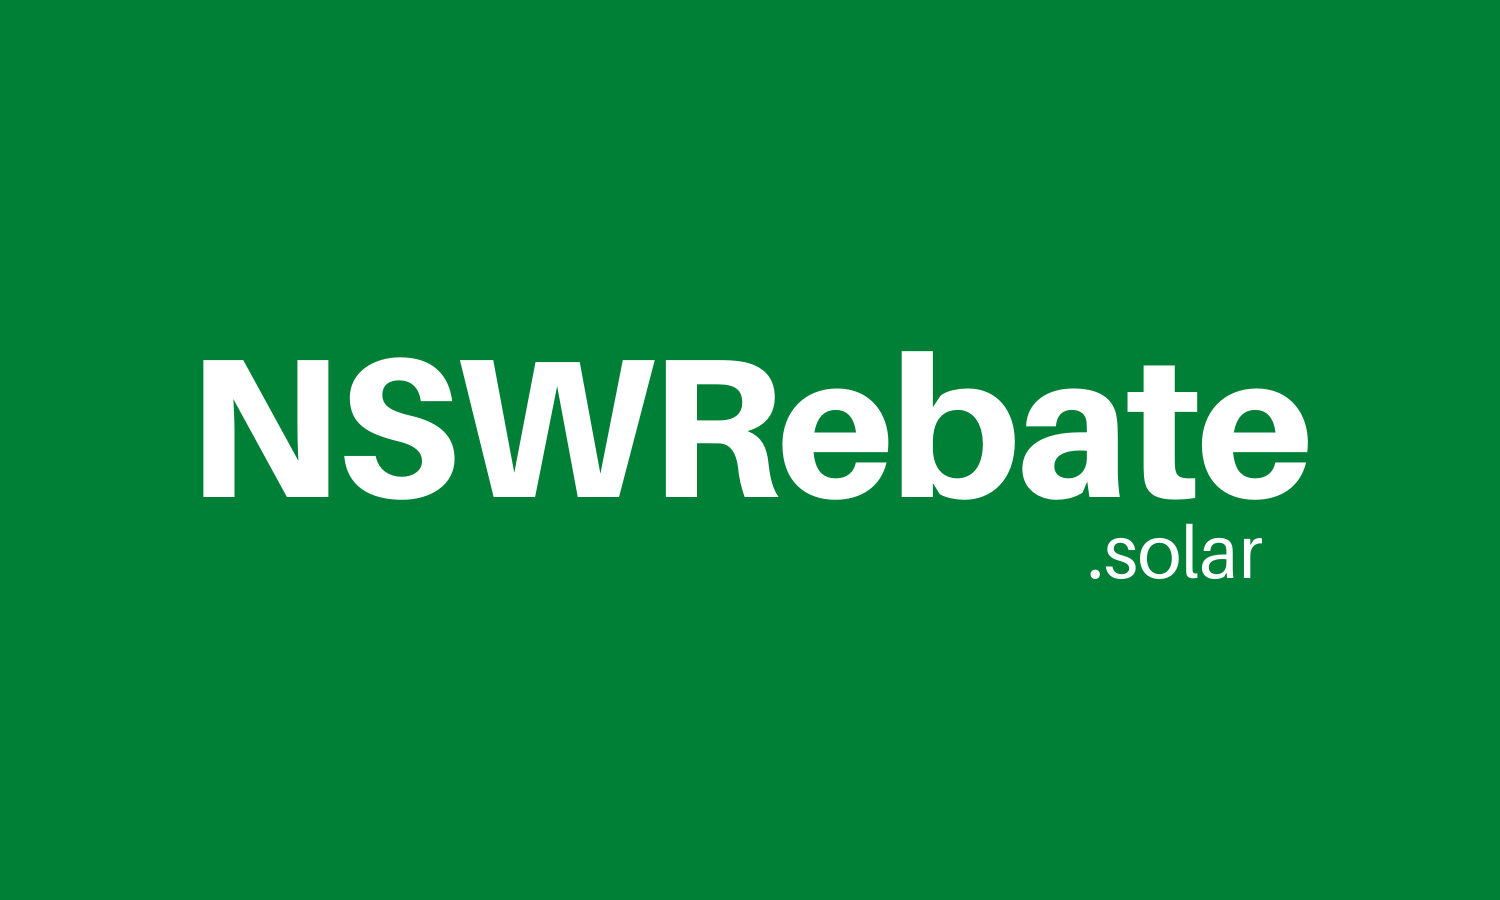 Newcastle Solar Rebate